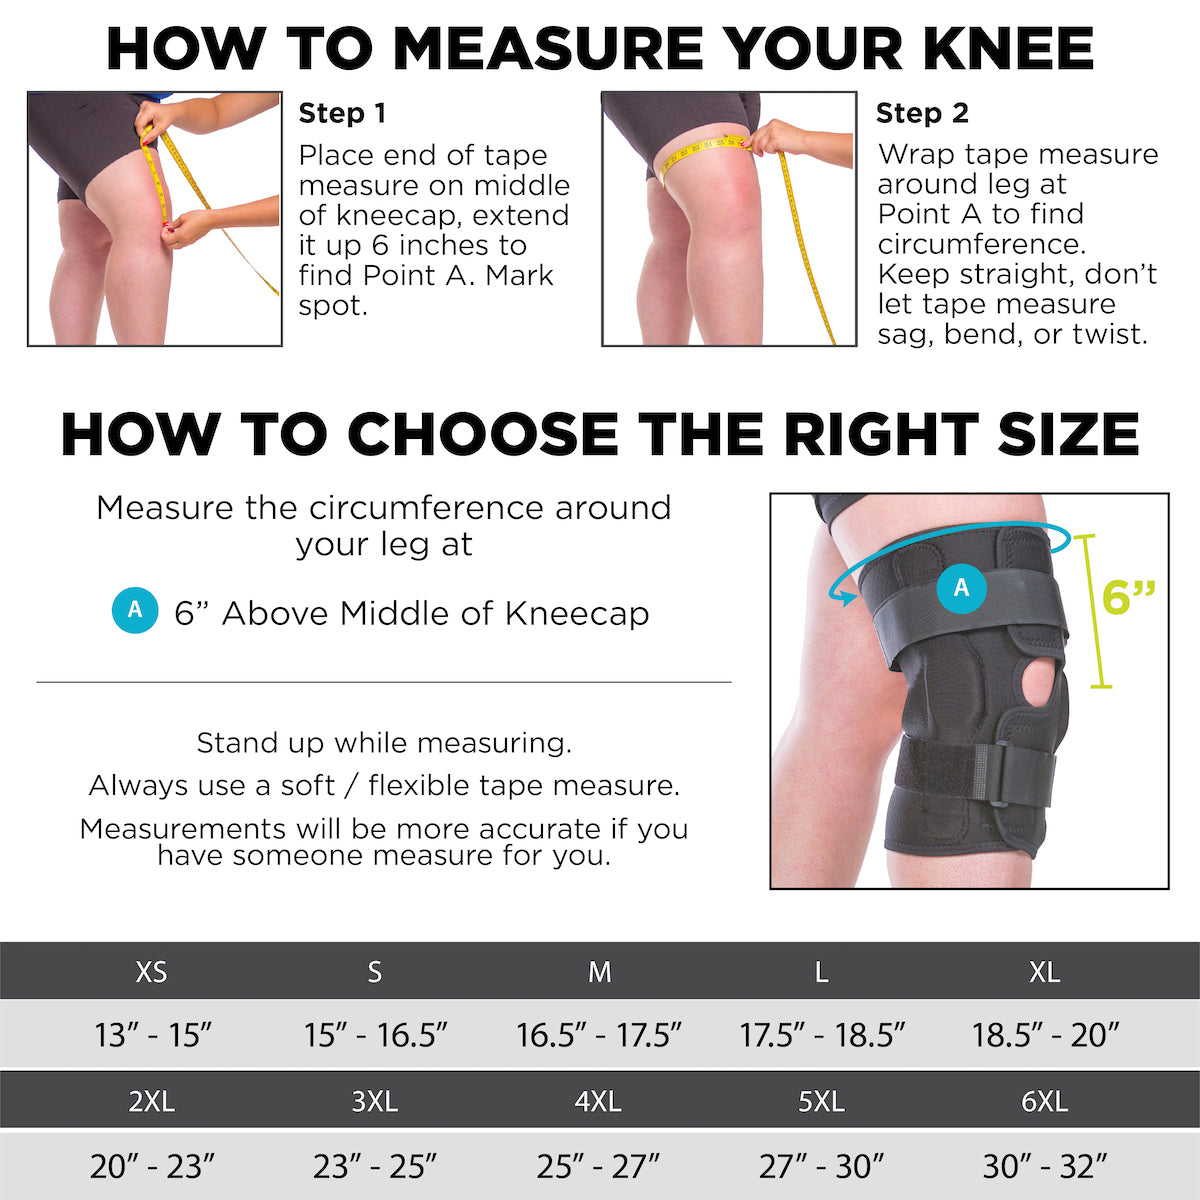 range of motion knee brace sizing chart from XS through 6XL